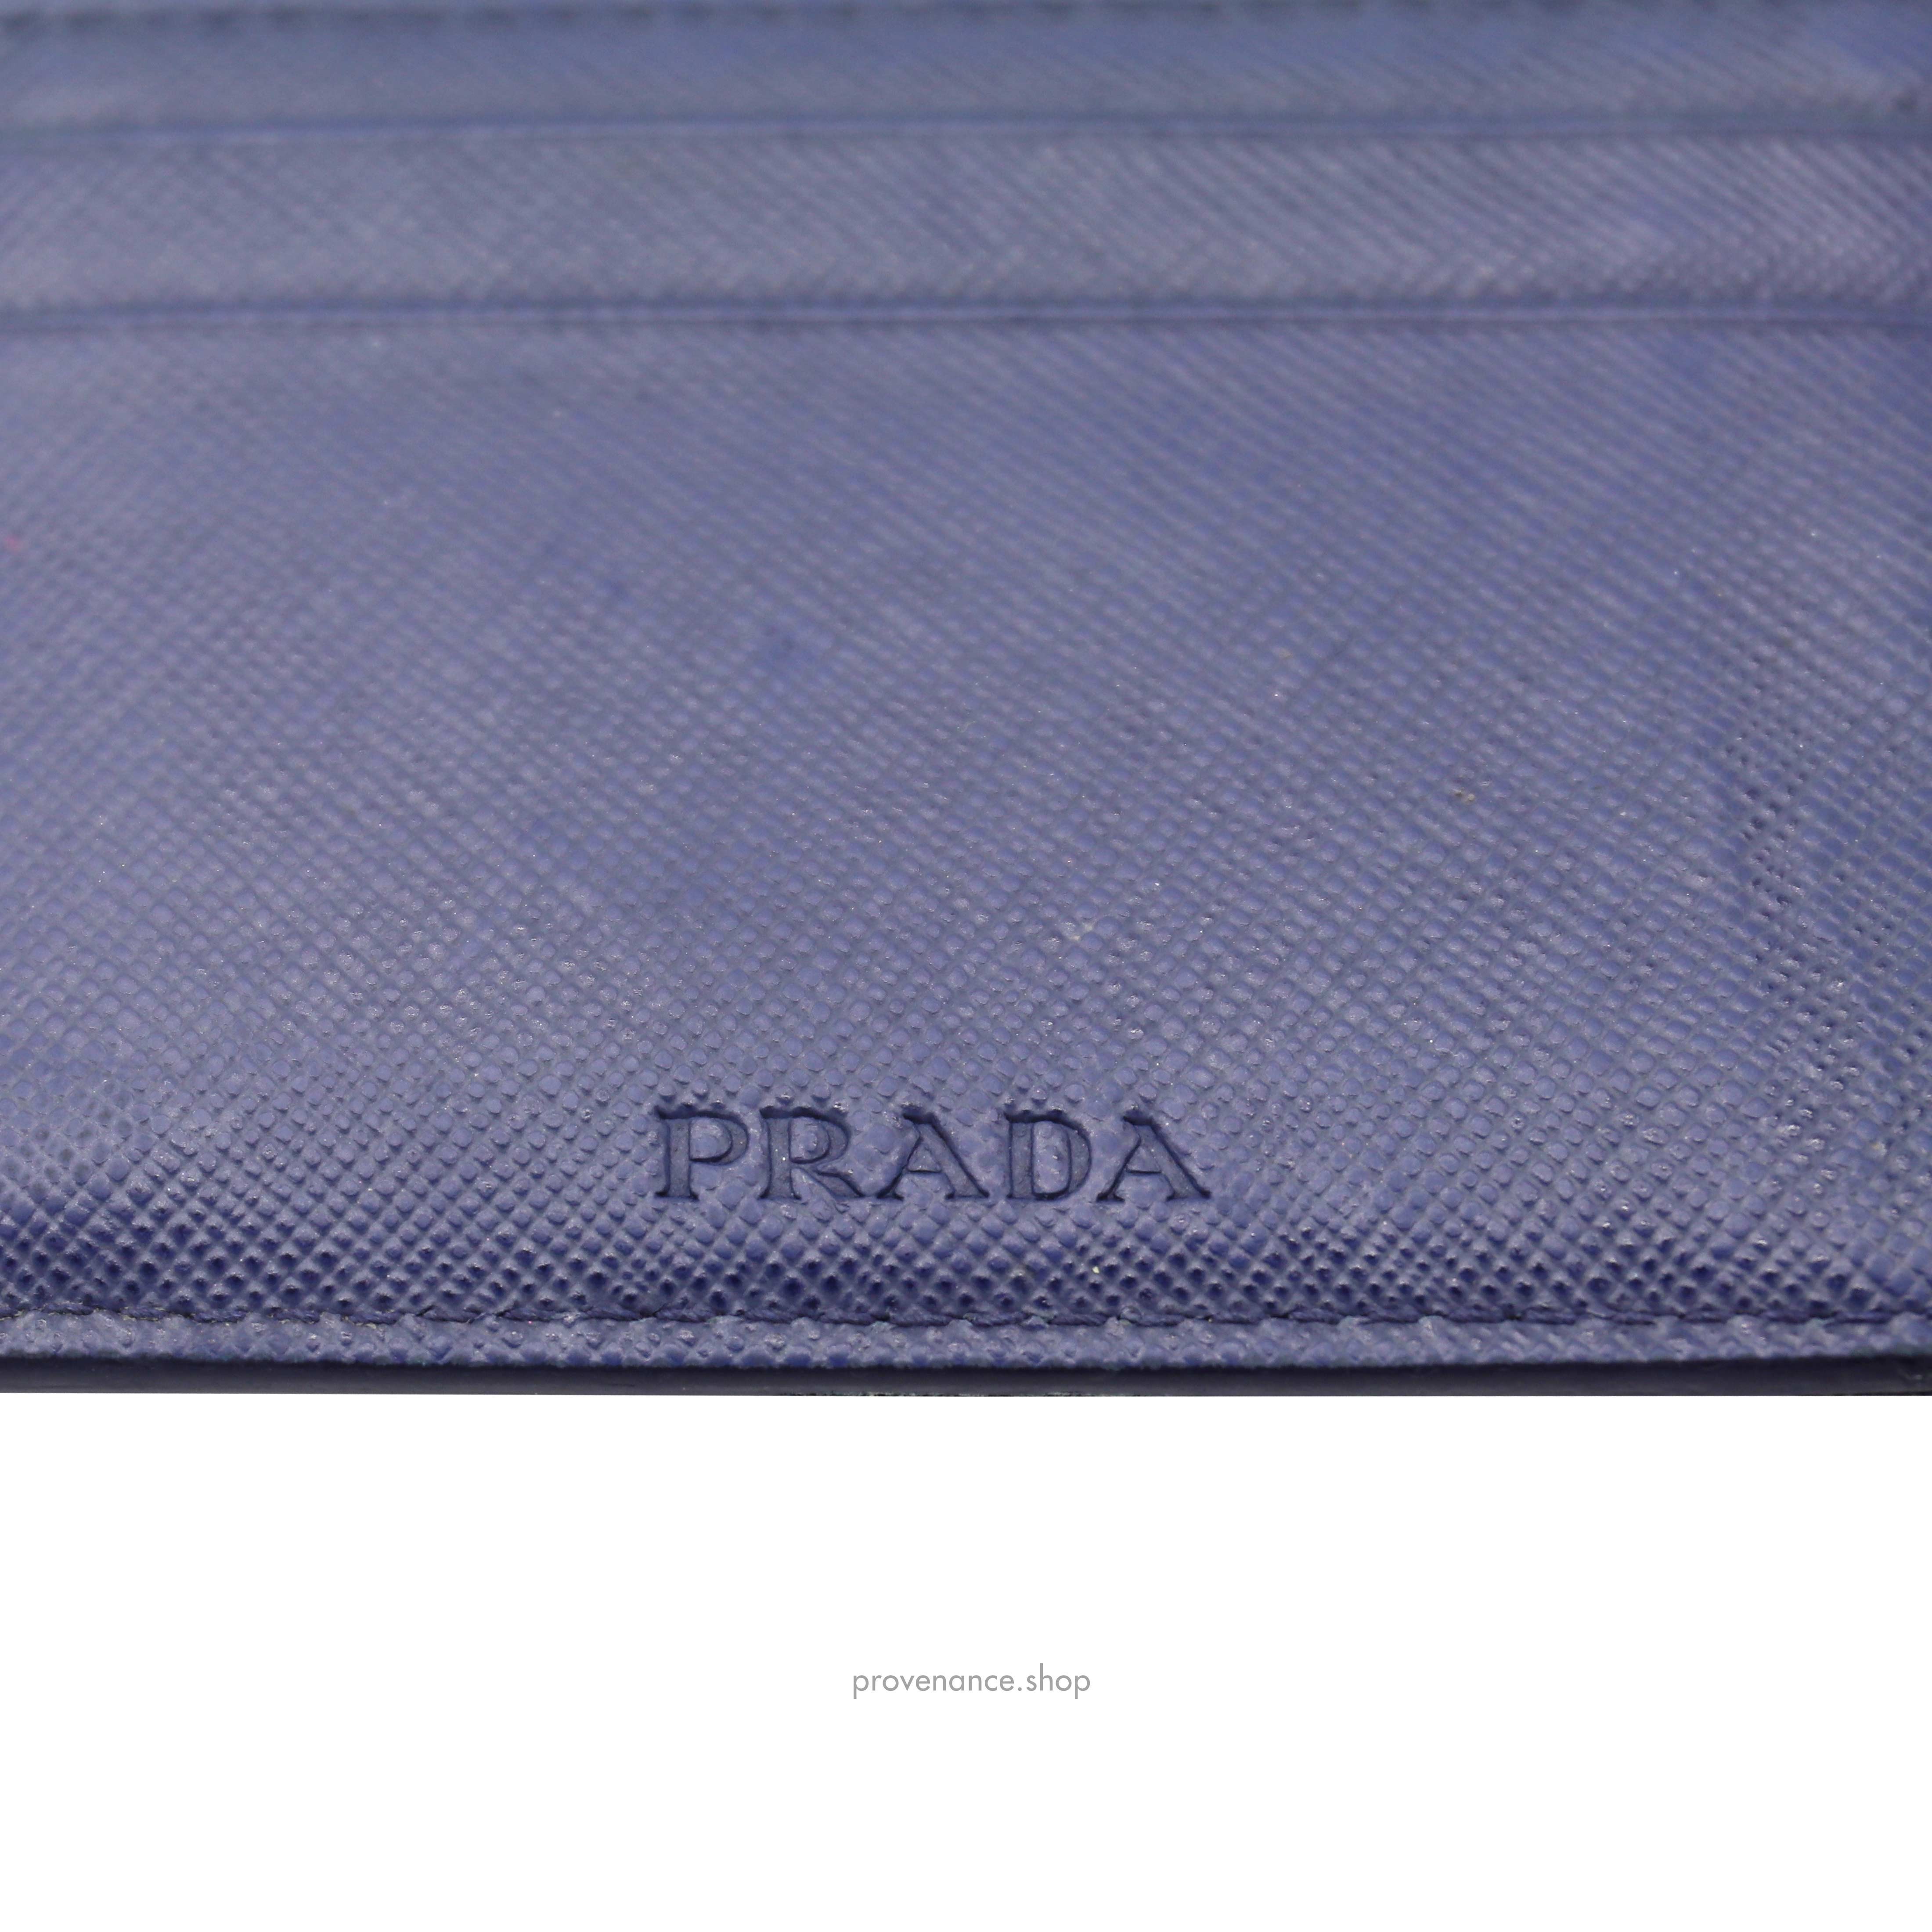 Prada Cardholder Wallet - Navy Blue Saffiano Leather - 2